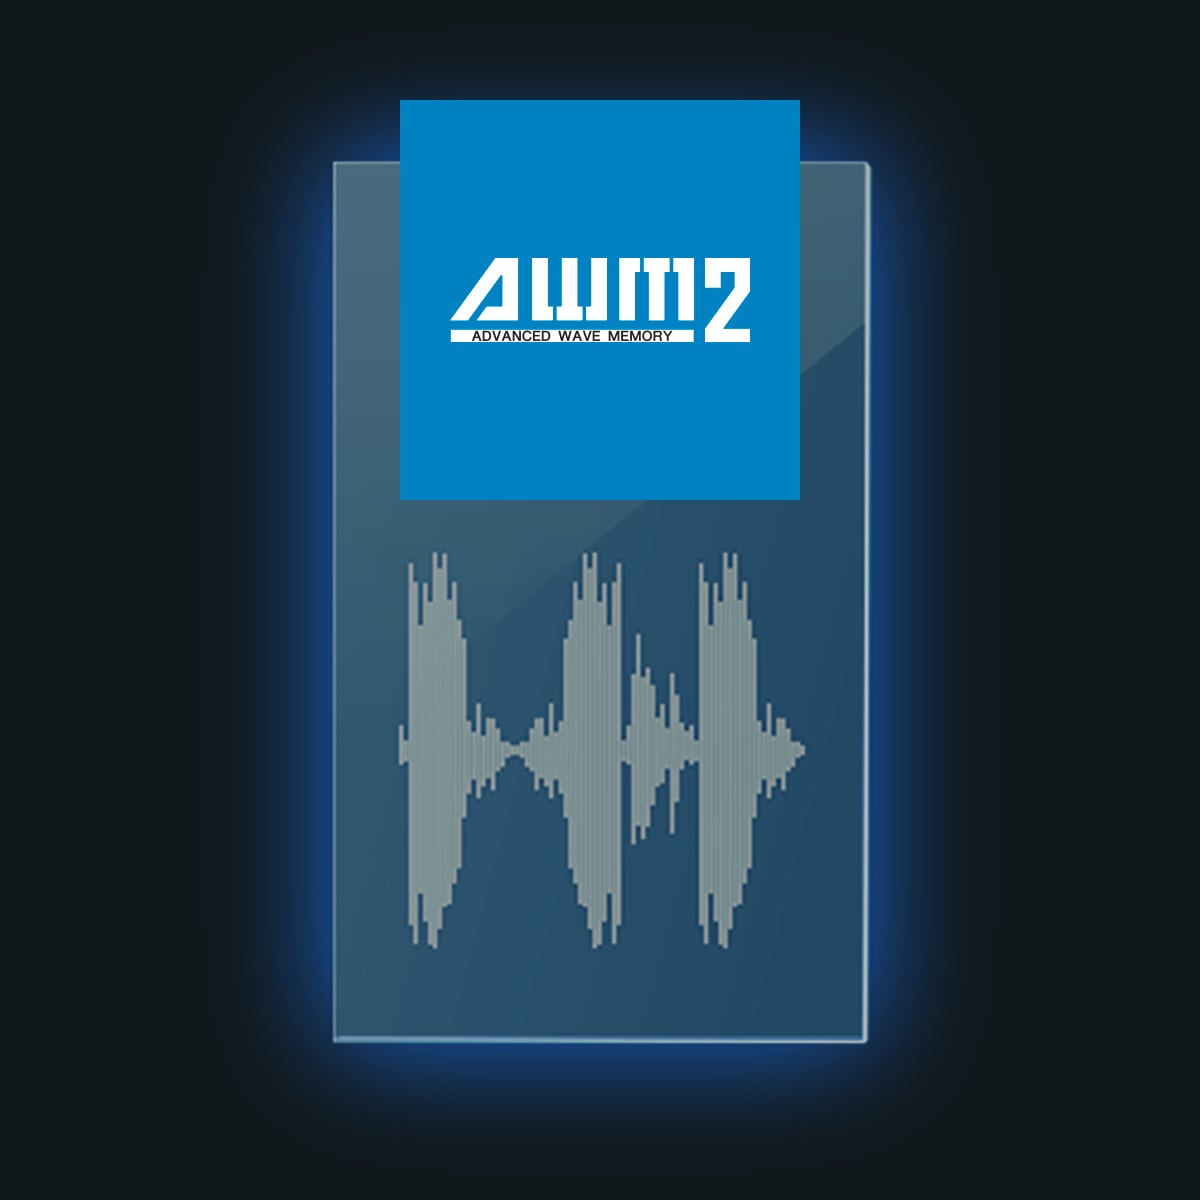 AWM2 Engine - Advanced Wave Memory